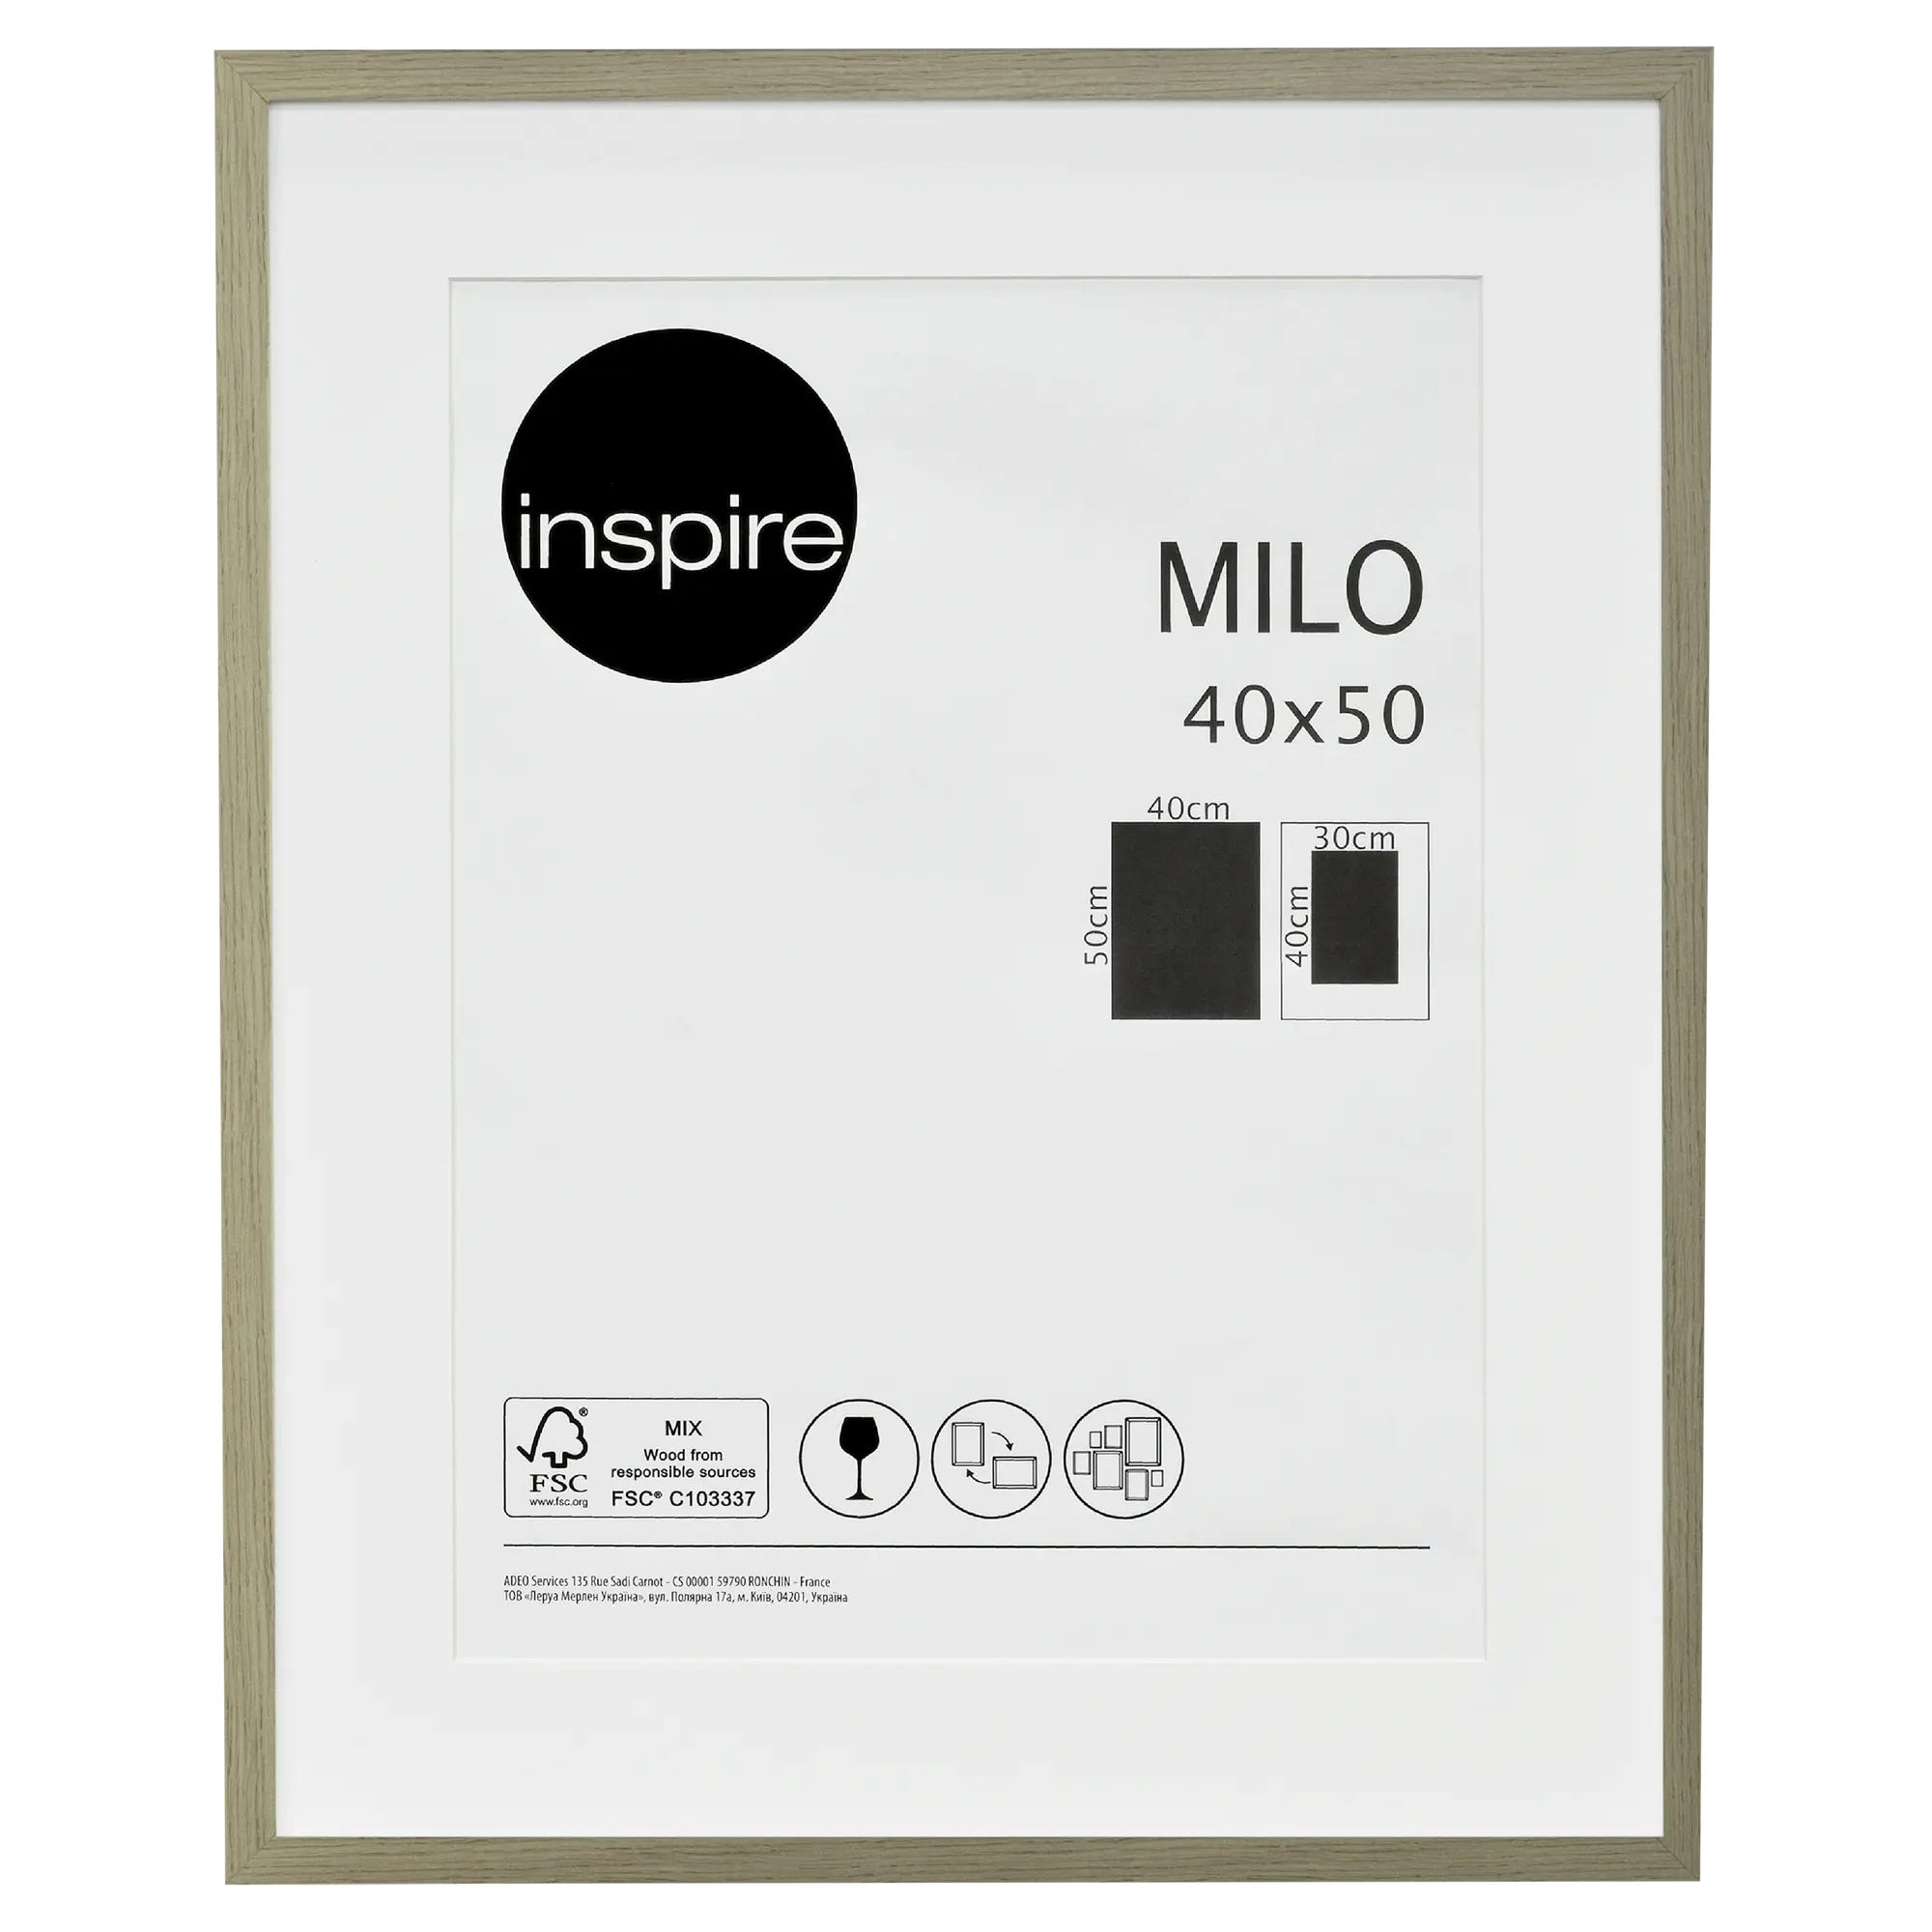 Marco con passe partout INSPIRE Milo roble 40 x 50cm